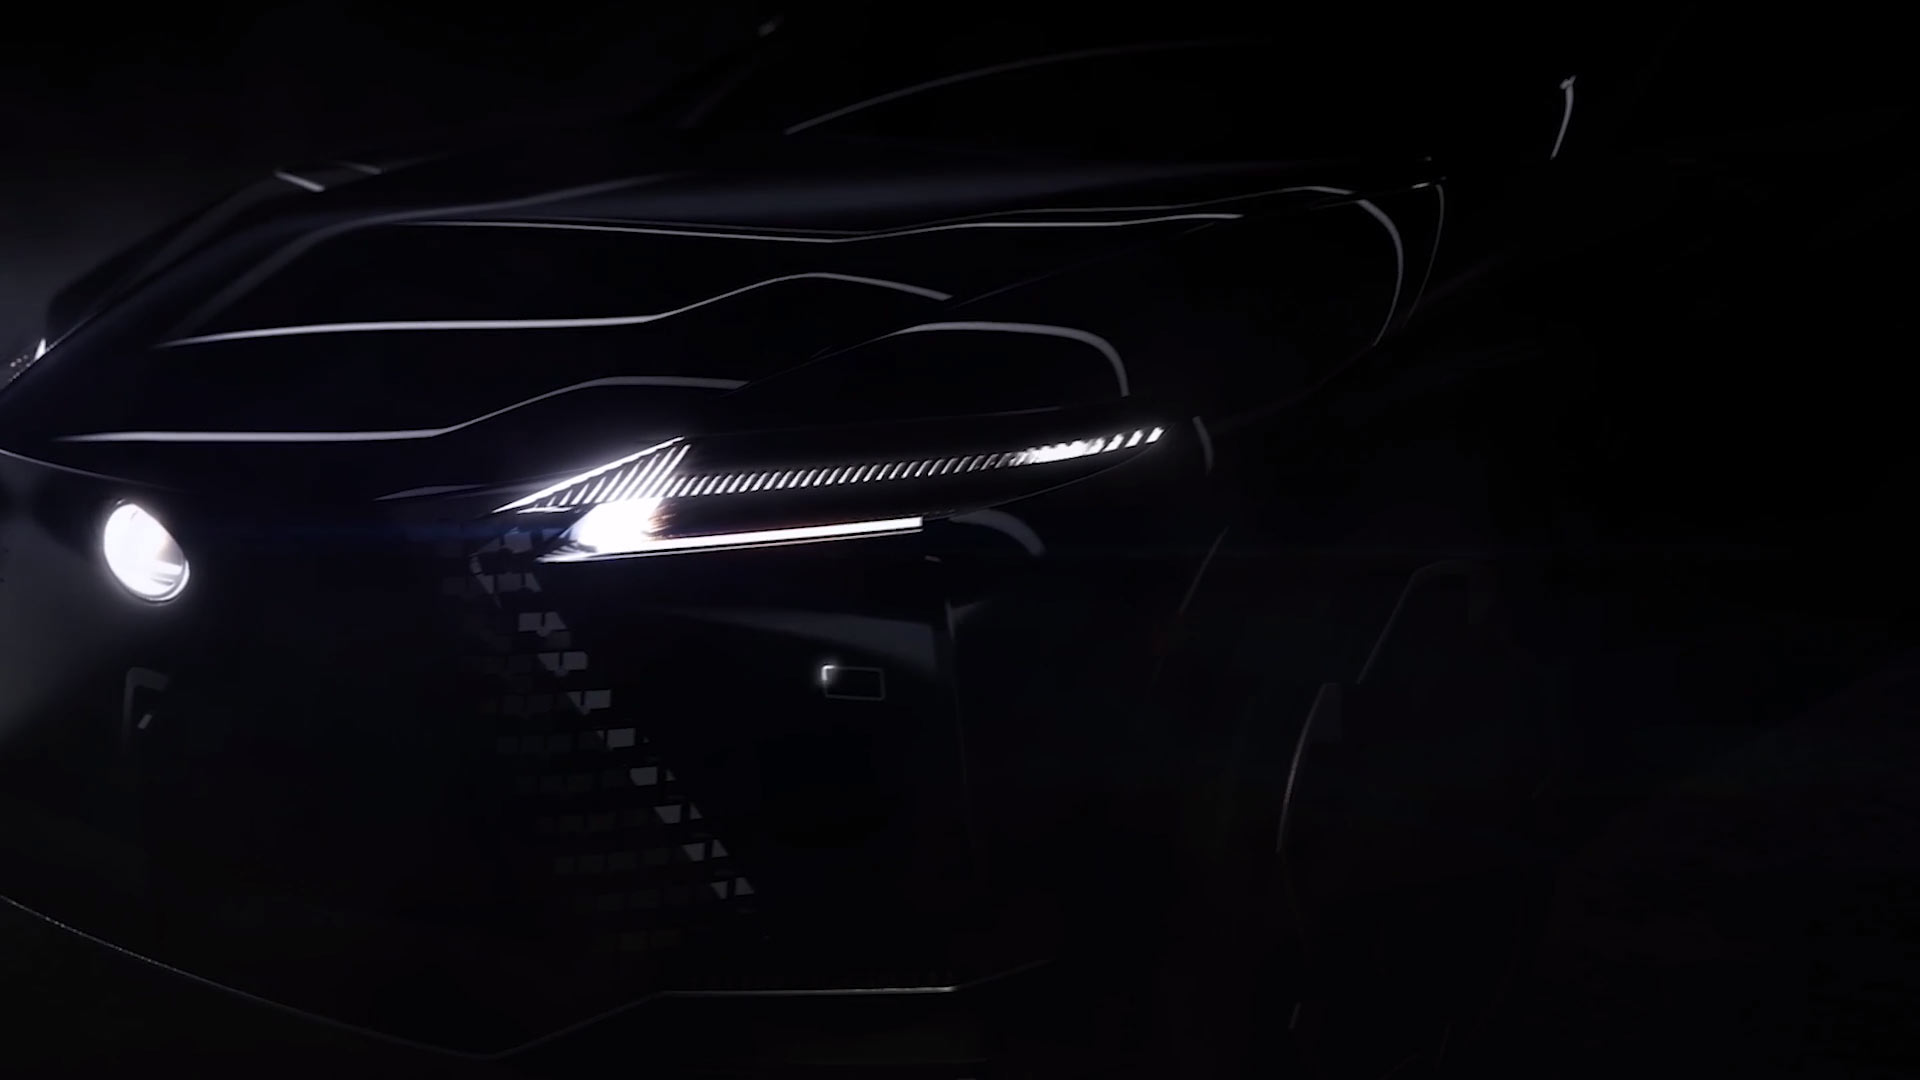 The New Lexus Concept Car Head Lamp